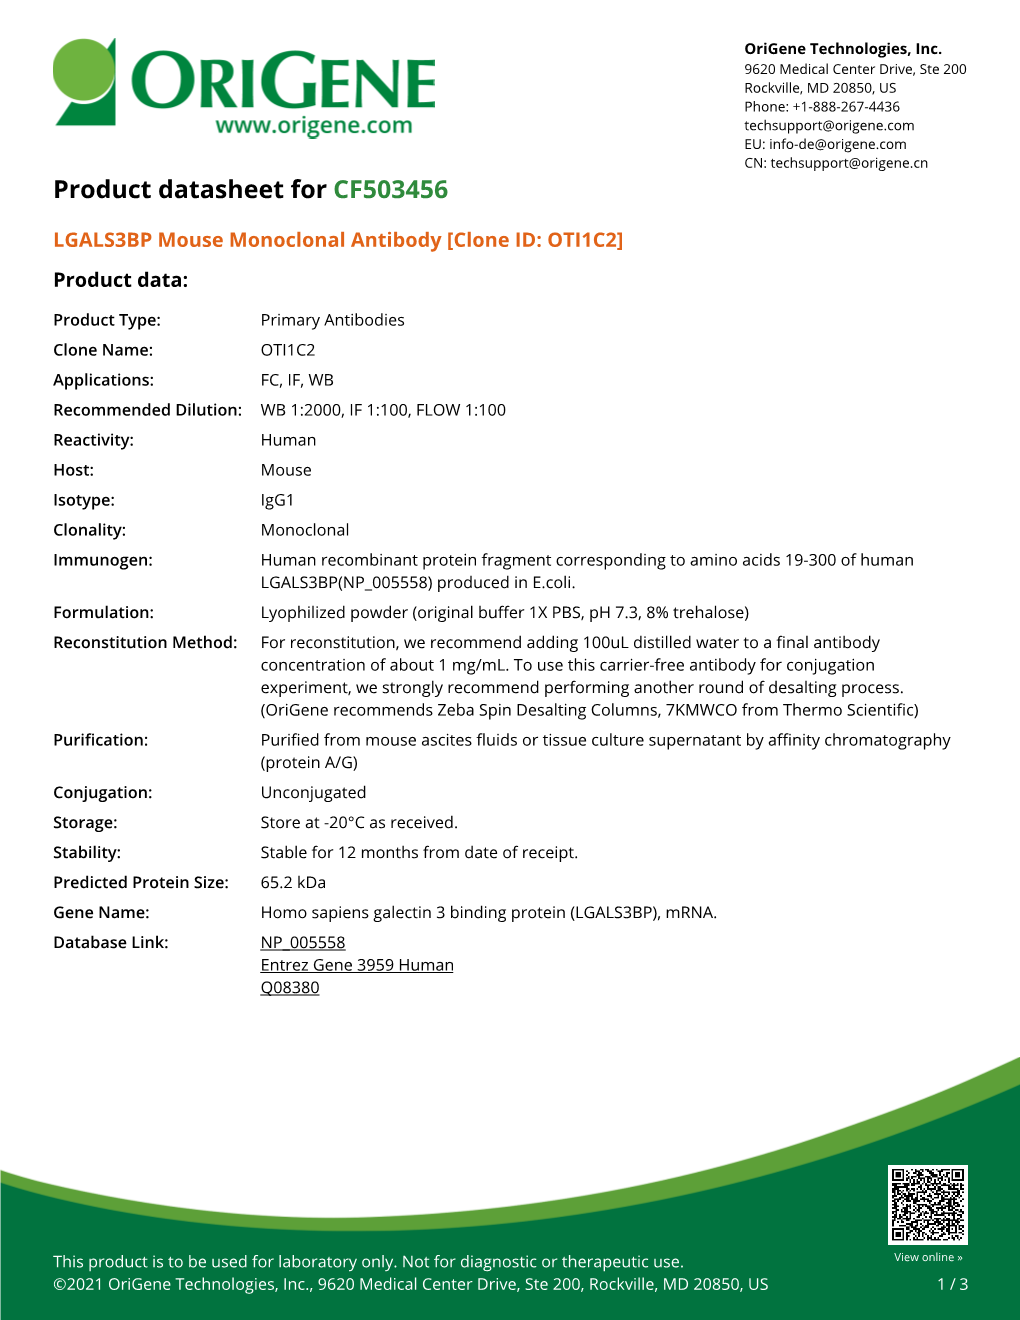 LGALS3BP Mouse Monoclonal Antibody [Clone ID: OTI1C2] Product Data